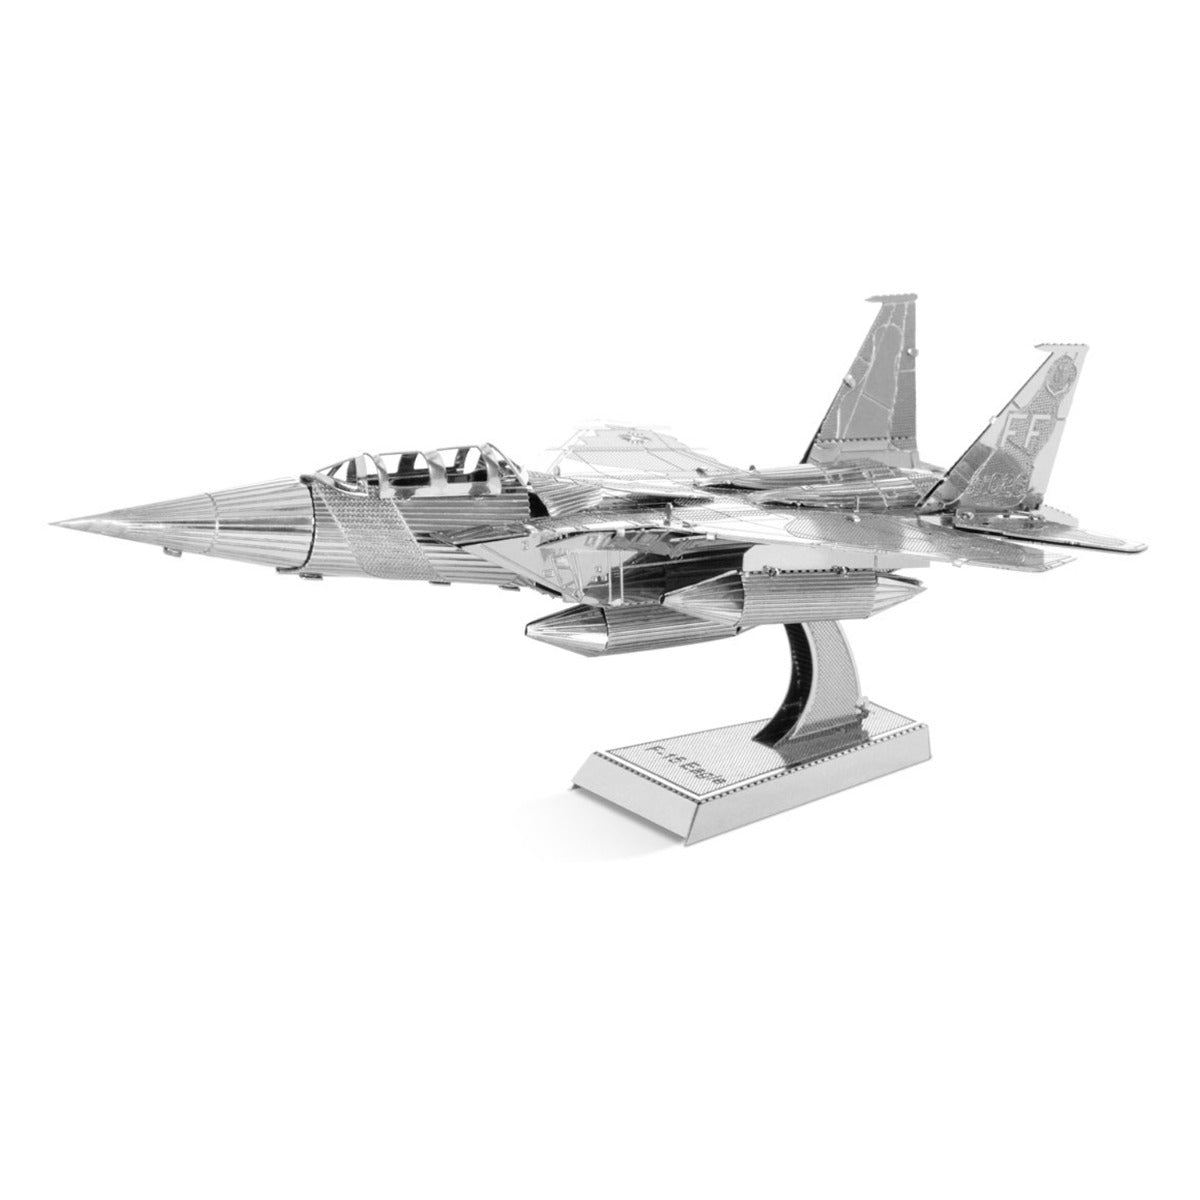 Metal Earth Metallbausätze MMS082 F-15 Eagle Flugzeug Metall Modell